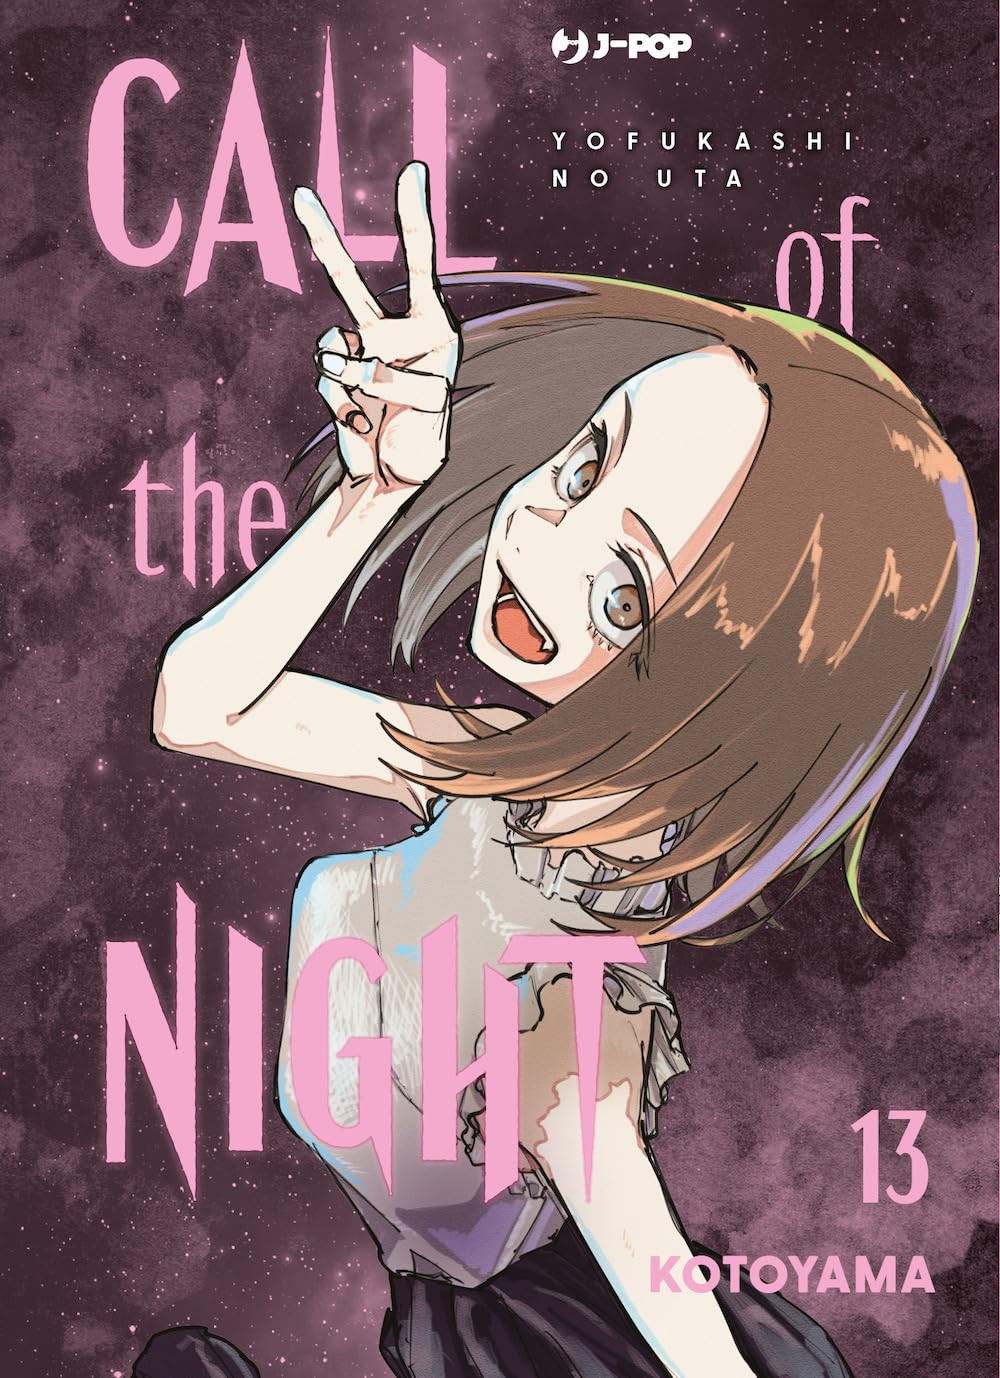 JPOP CALL OF THE NIGHT #013